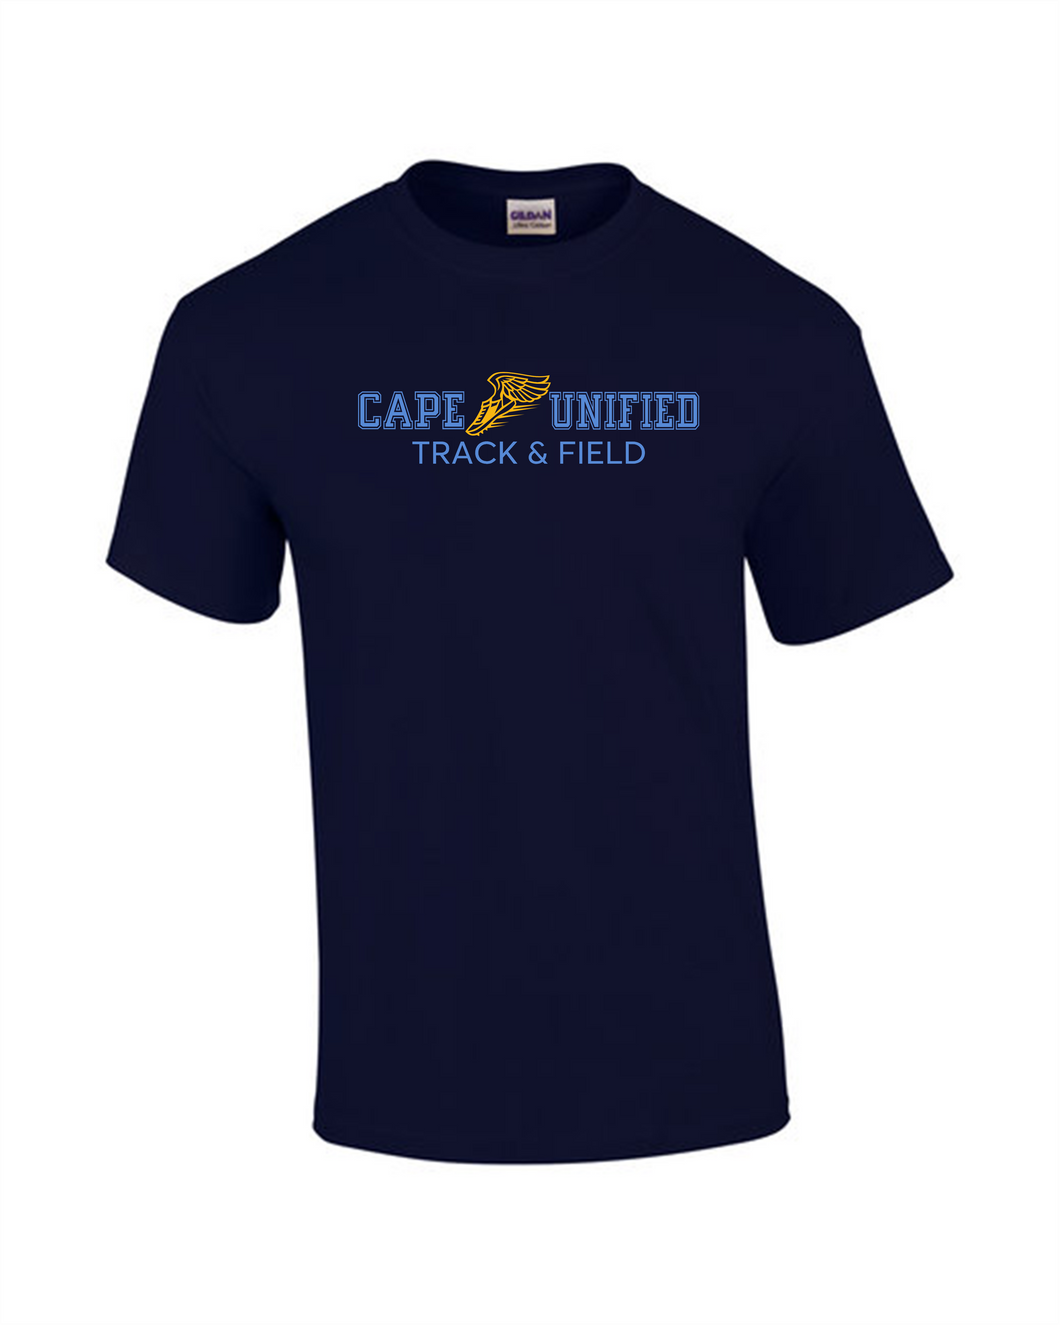 Cape Unified - Gildan Tshirt #G200